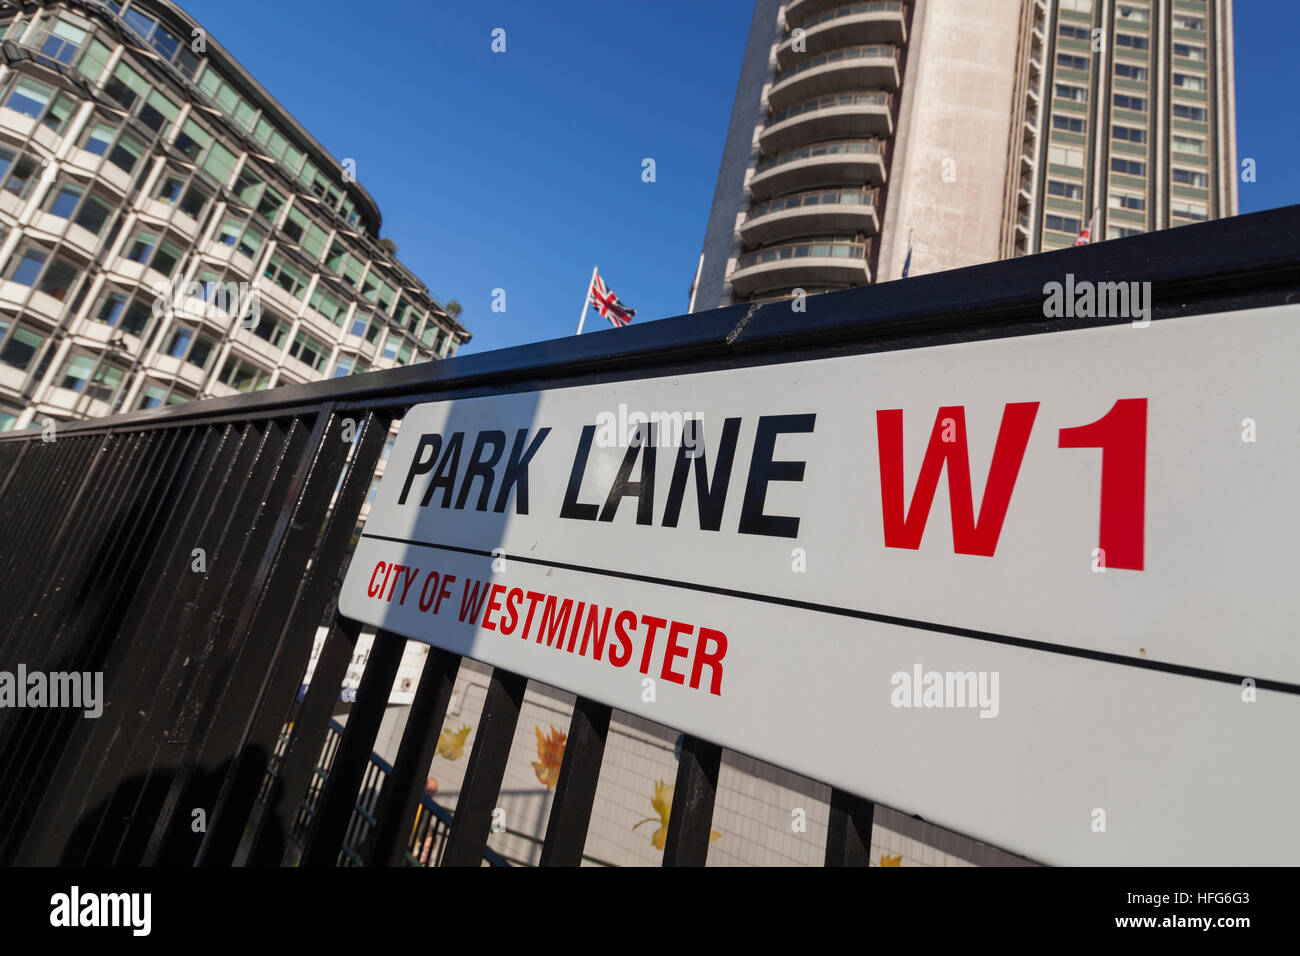 Park Lane street sign Stock Photo